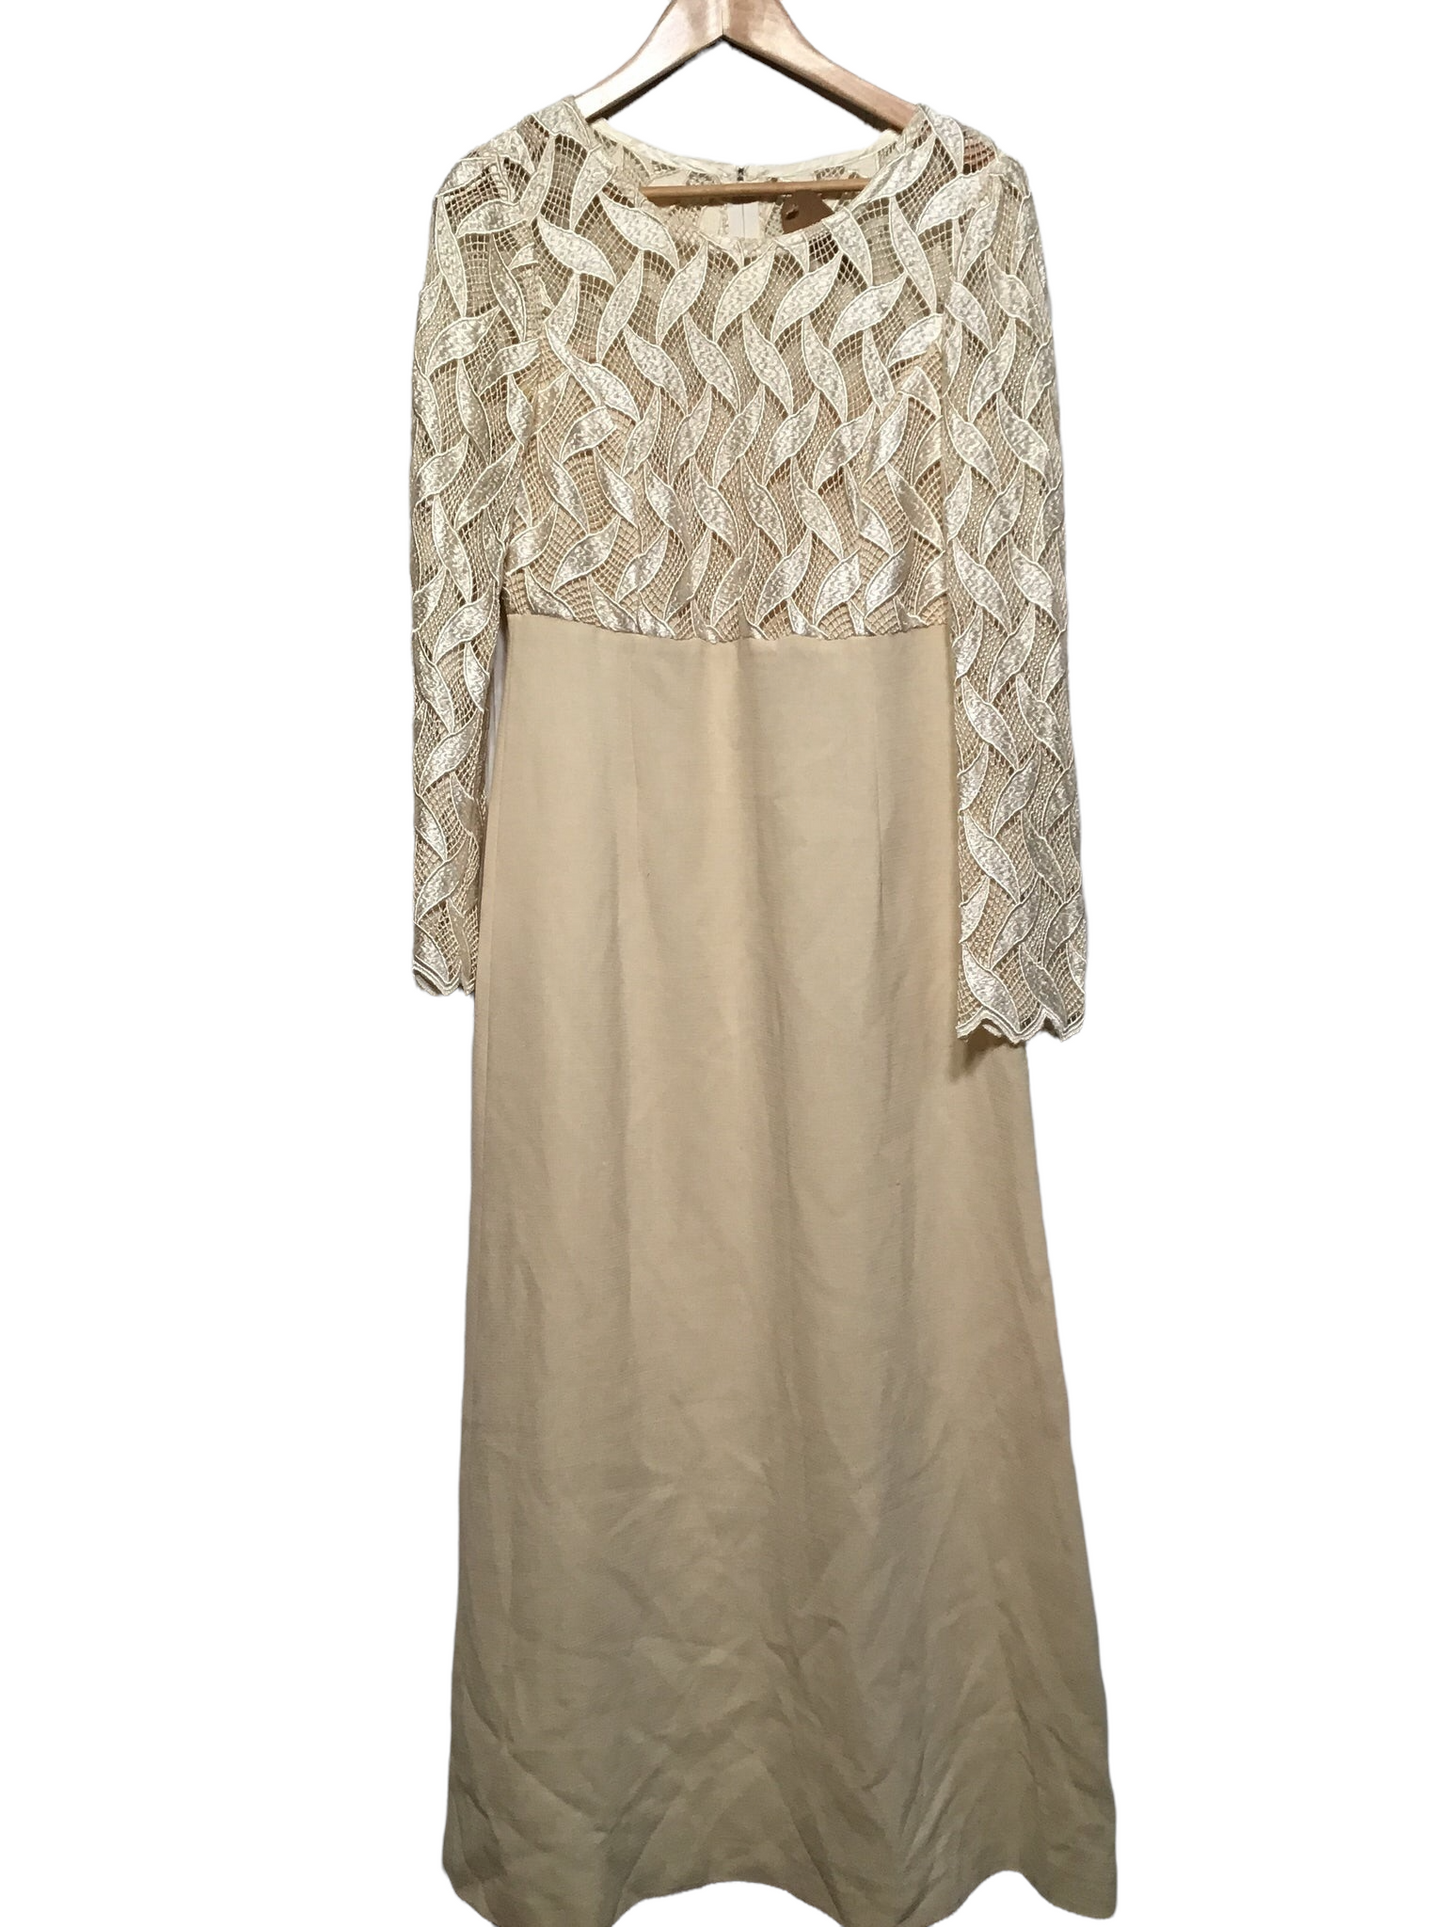 Ivory Evening Dress (Size L)